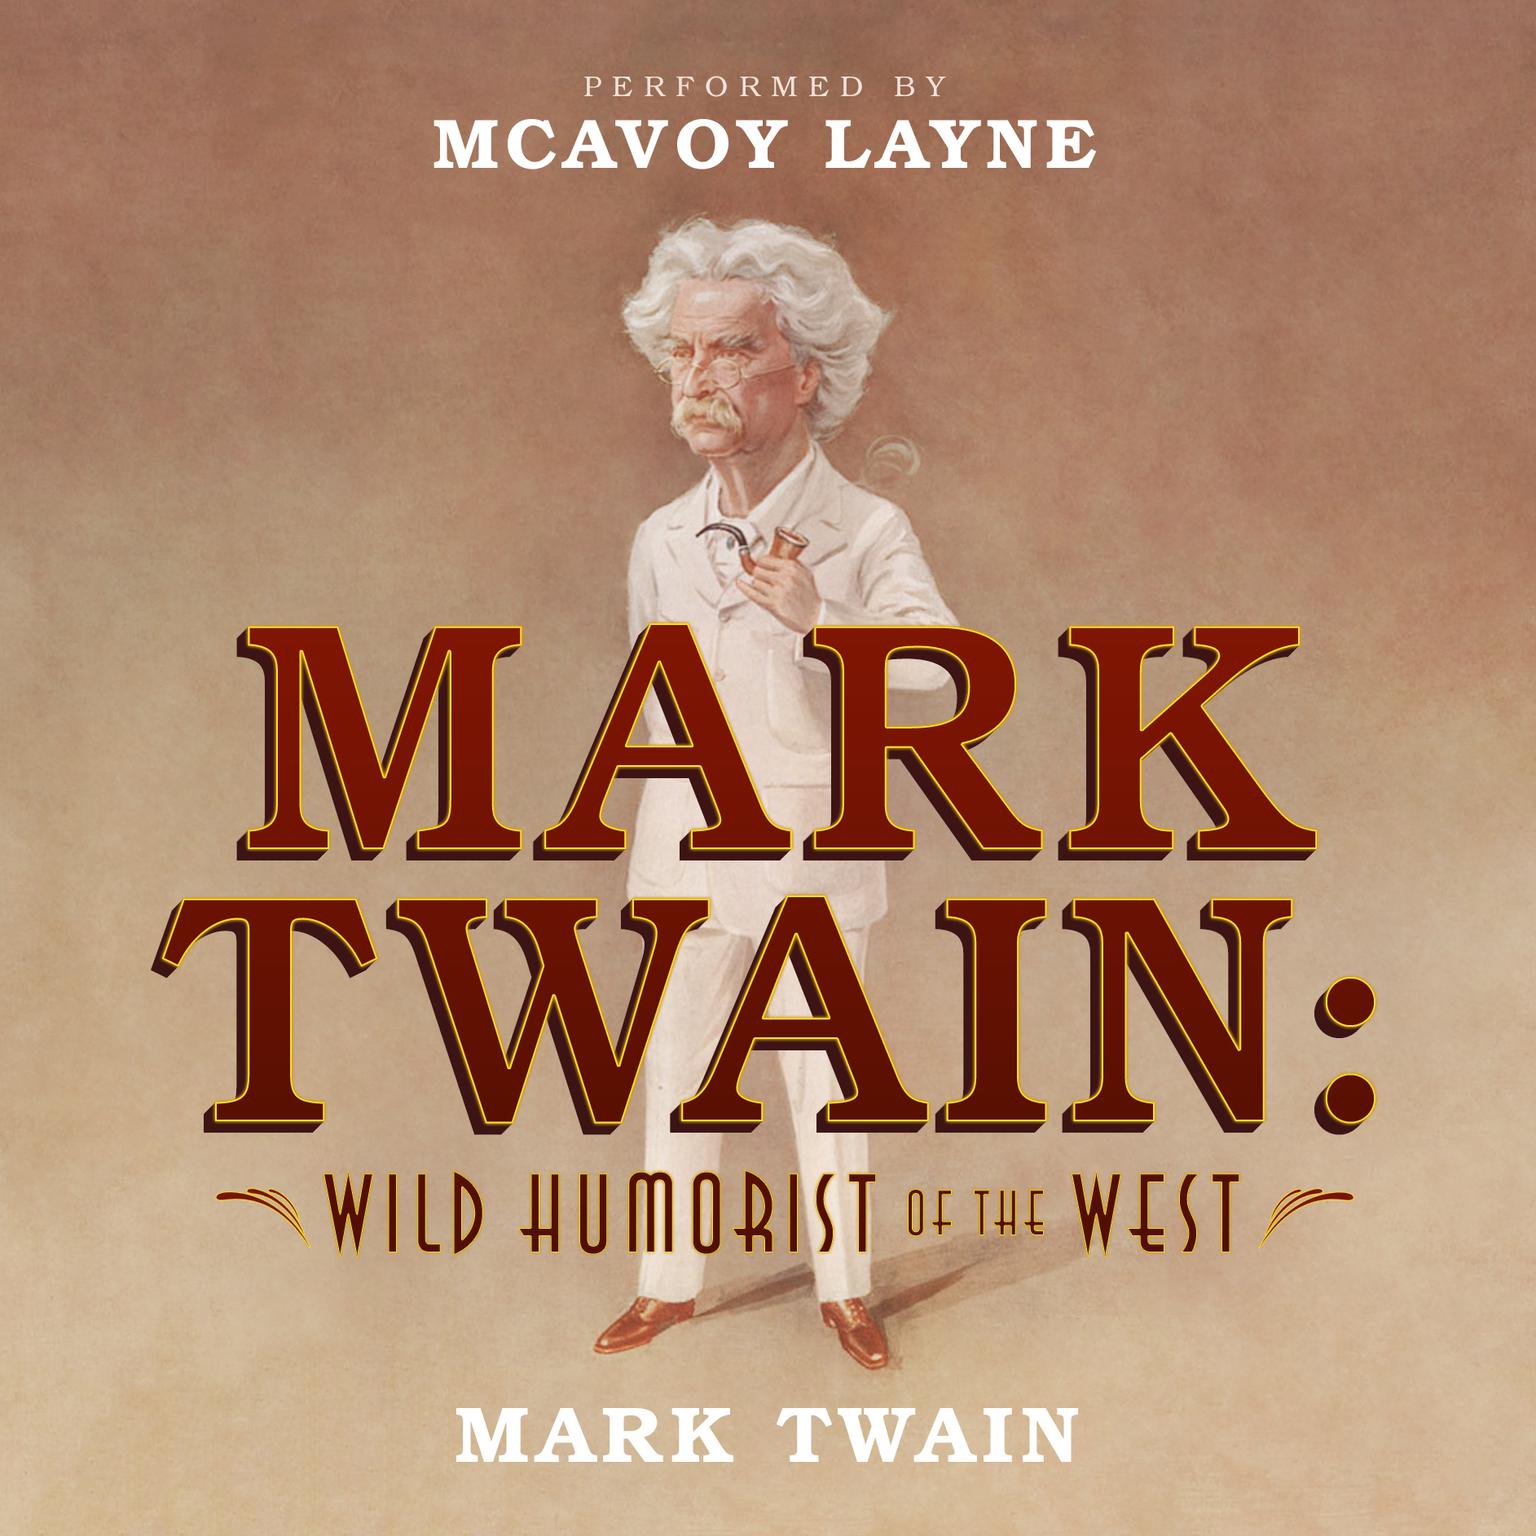 Mark Twain: Wild Humorist of the West Audiobook, by Mark Twain